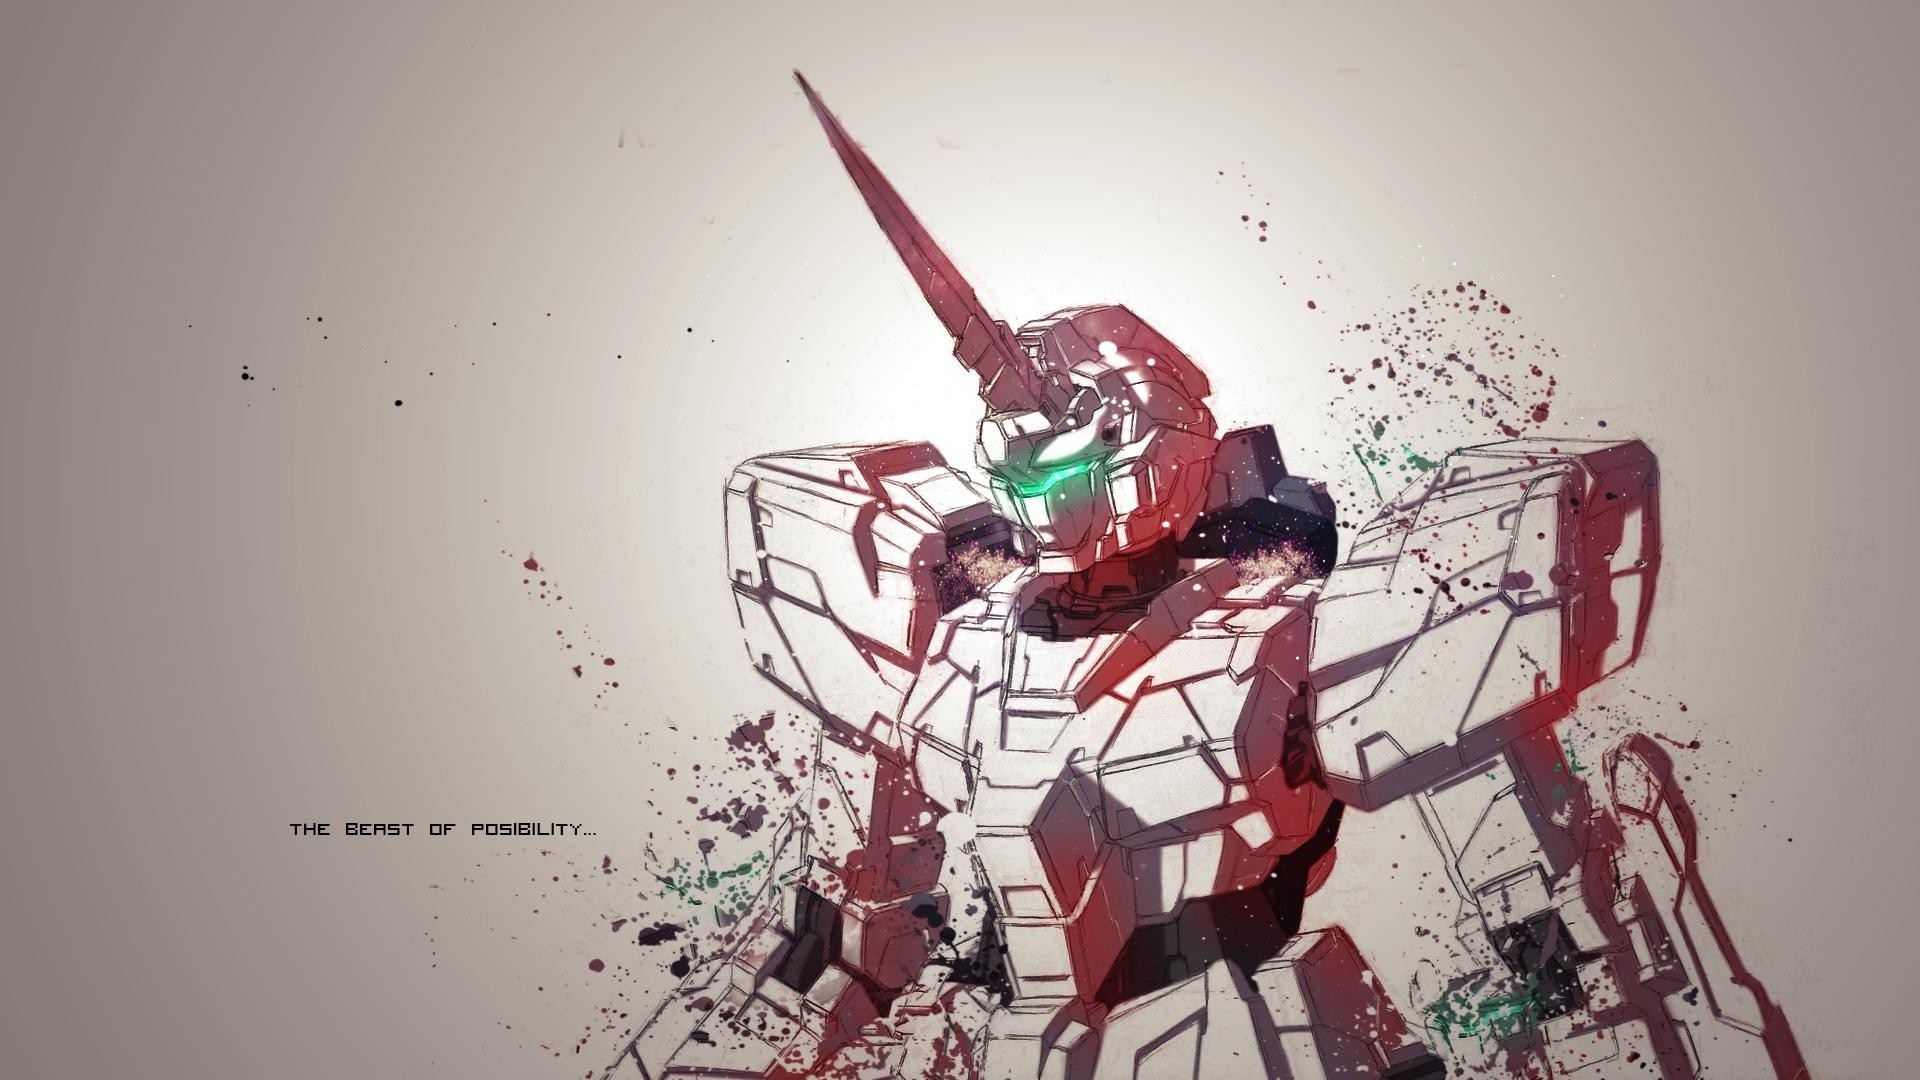 1920x1080 1080x1920 Gundam iPhone 6 Plus Wallpaper 10616 - Anime iPhone 6 Plus  Wallpapers #Anime #iPhone 6 #Plus #Wallpaper